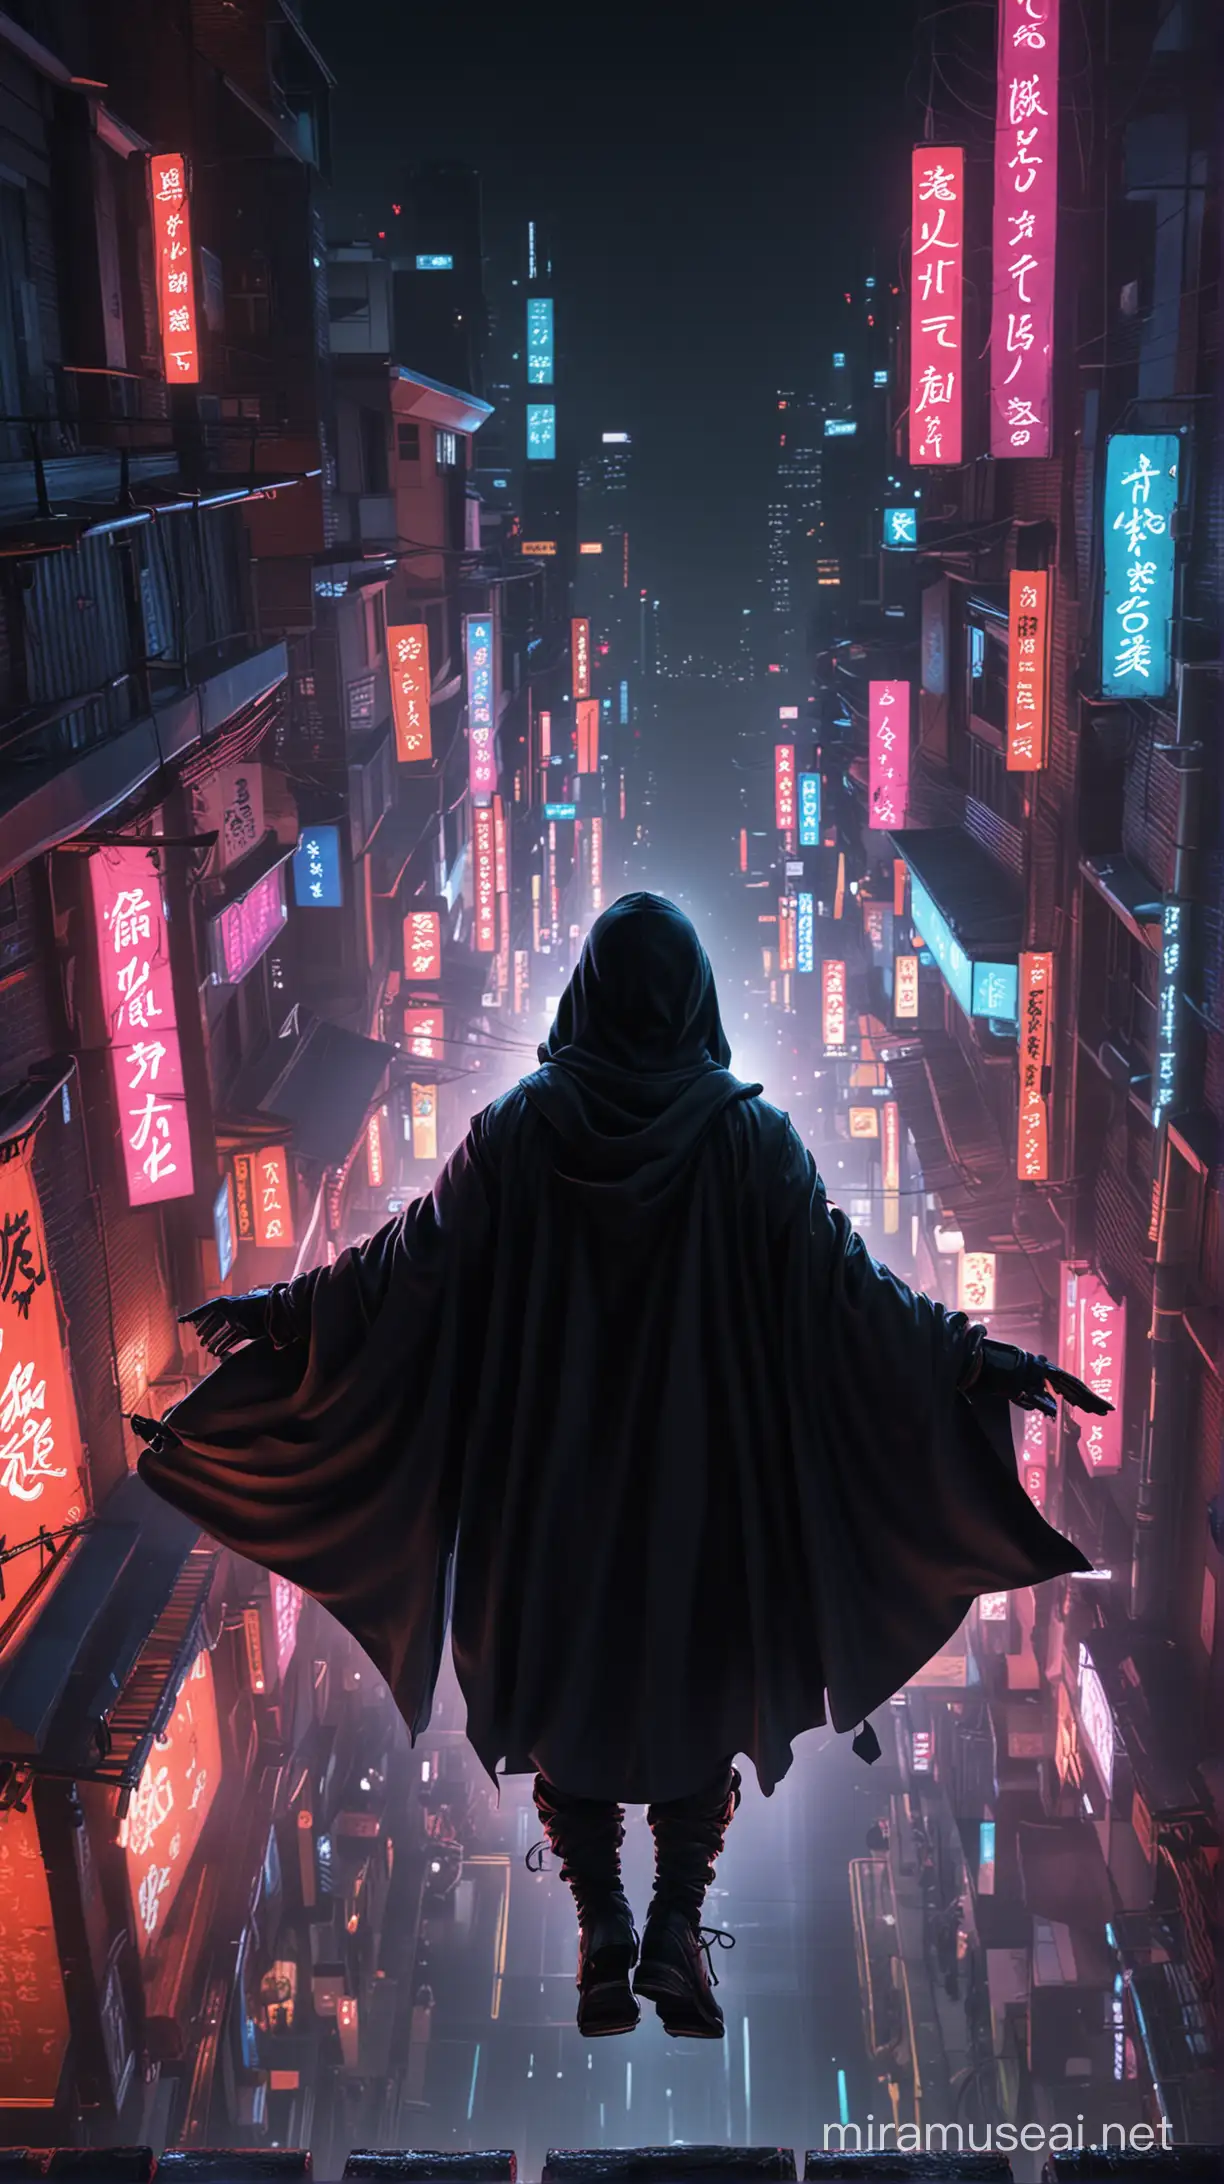 Futuristic Ninja Overlooking Neonlit Urban Landscape